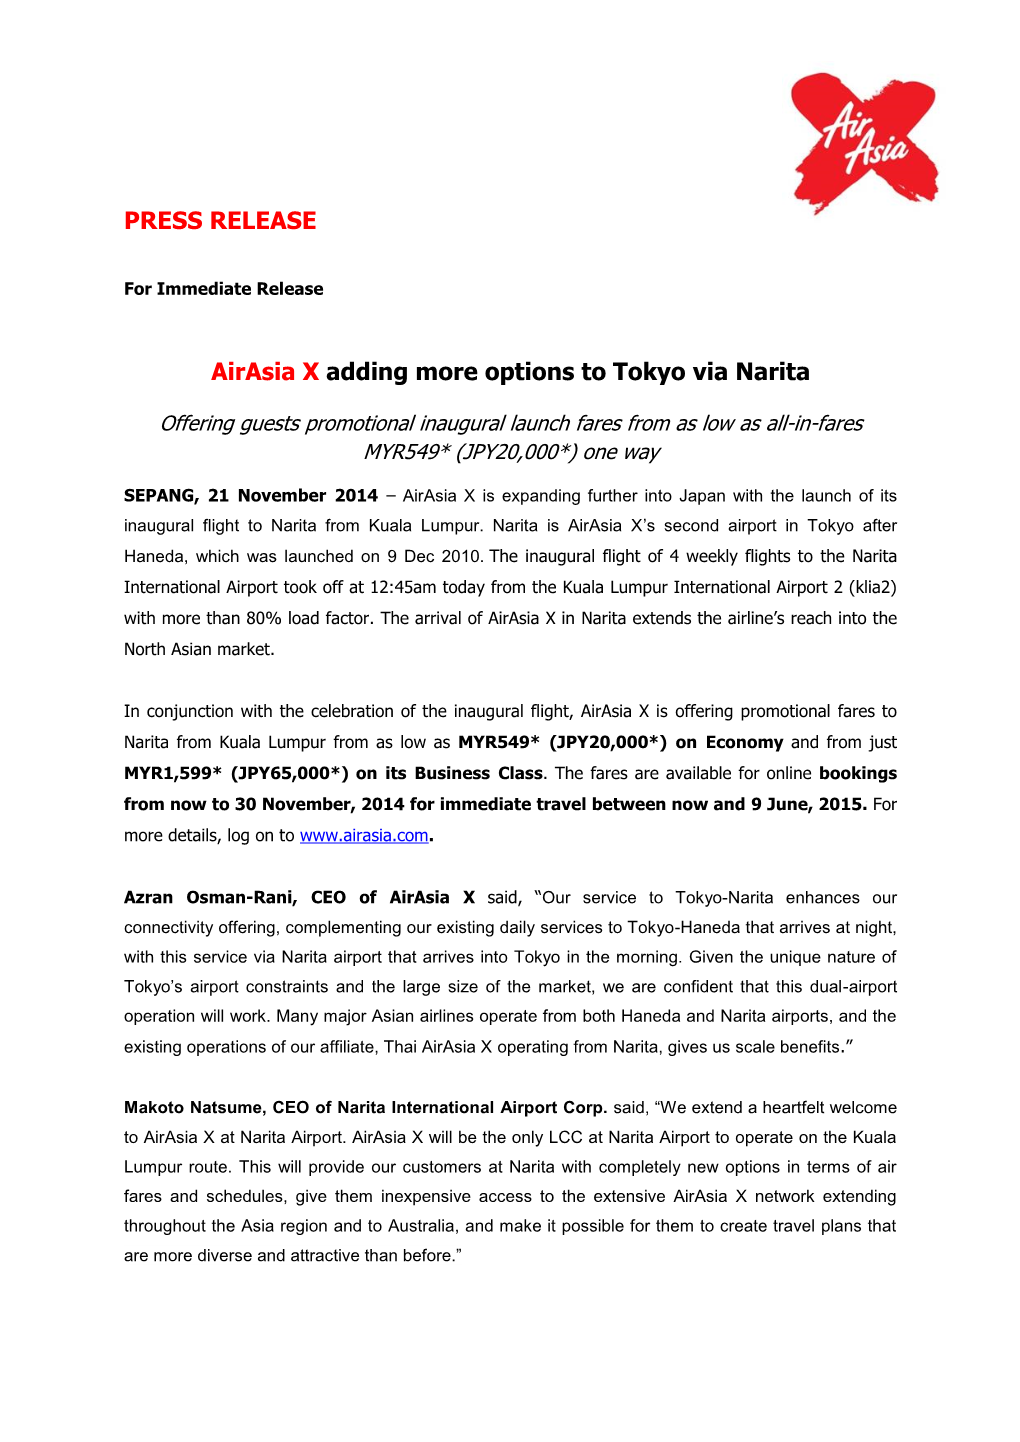 PRESS RELEASE Airasia X Adding More Options to Tokyo Via Narita